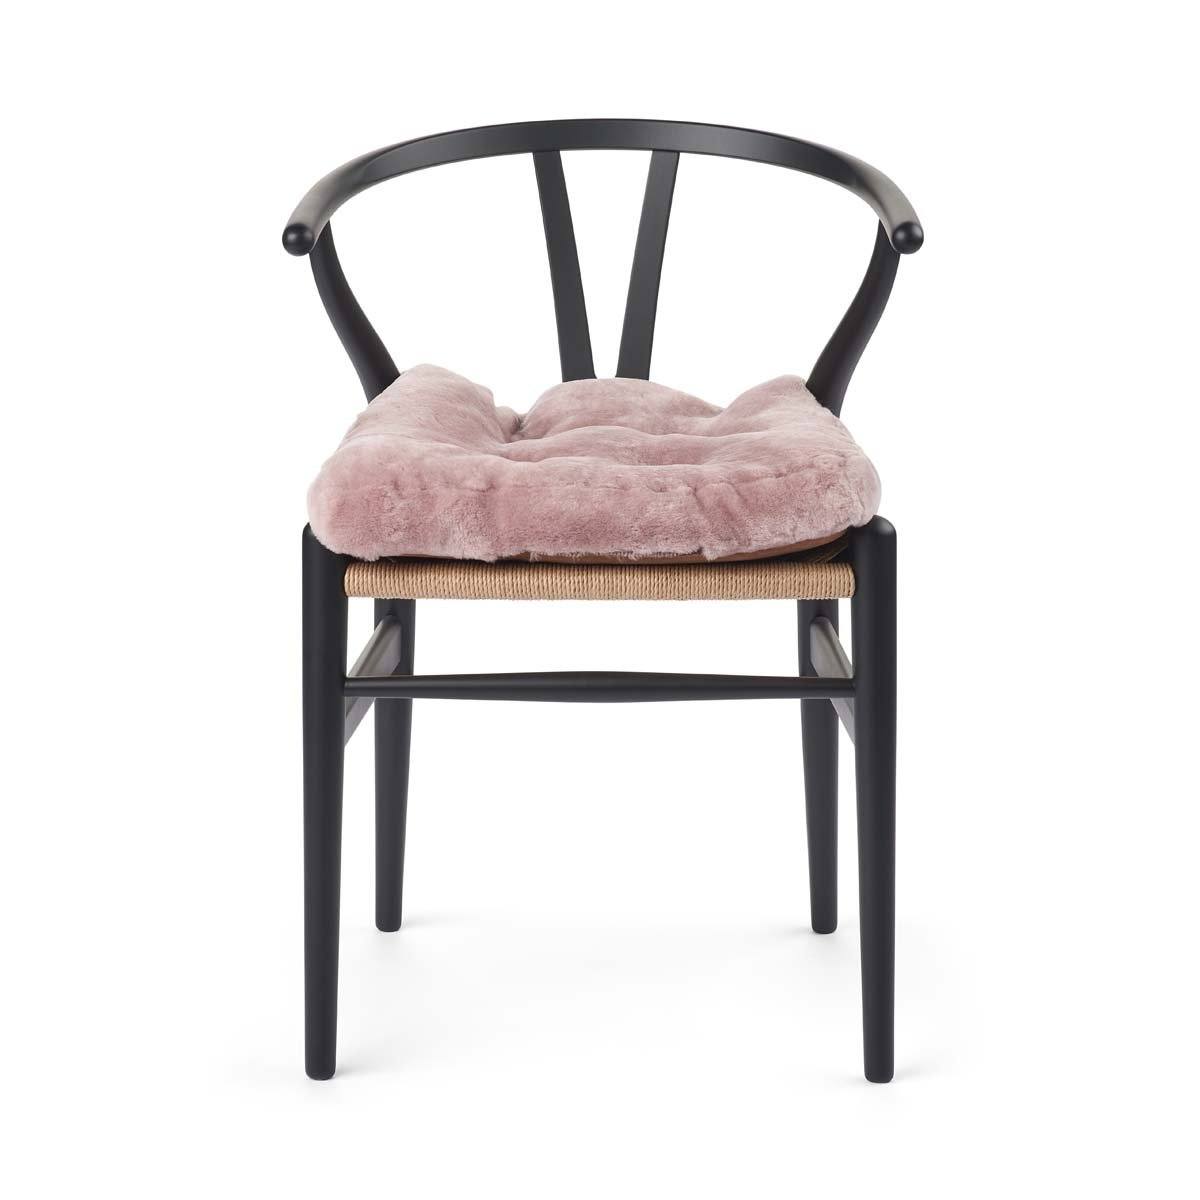 Almofada de assento | Pele de cordeiro, mocassin | 45x45 cm.